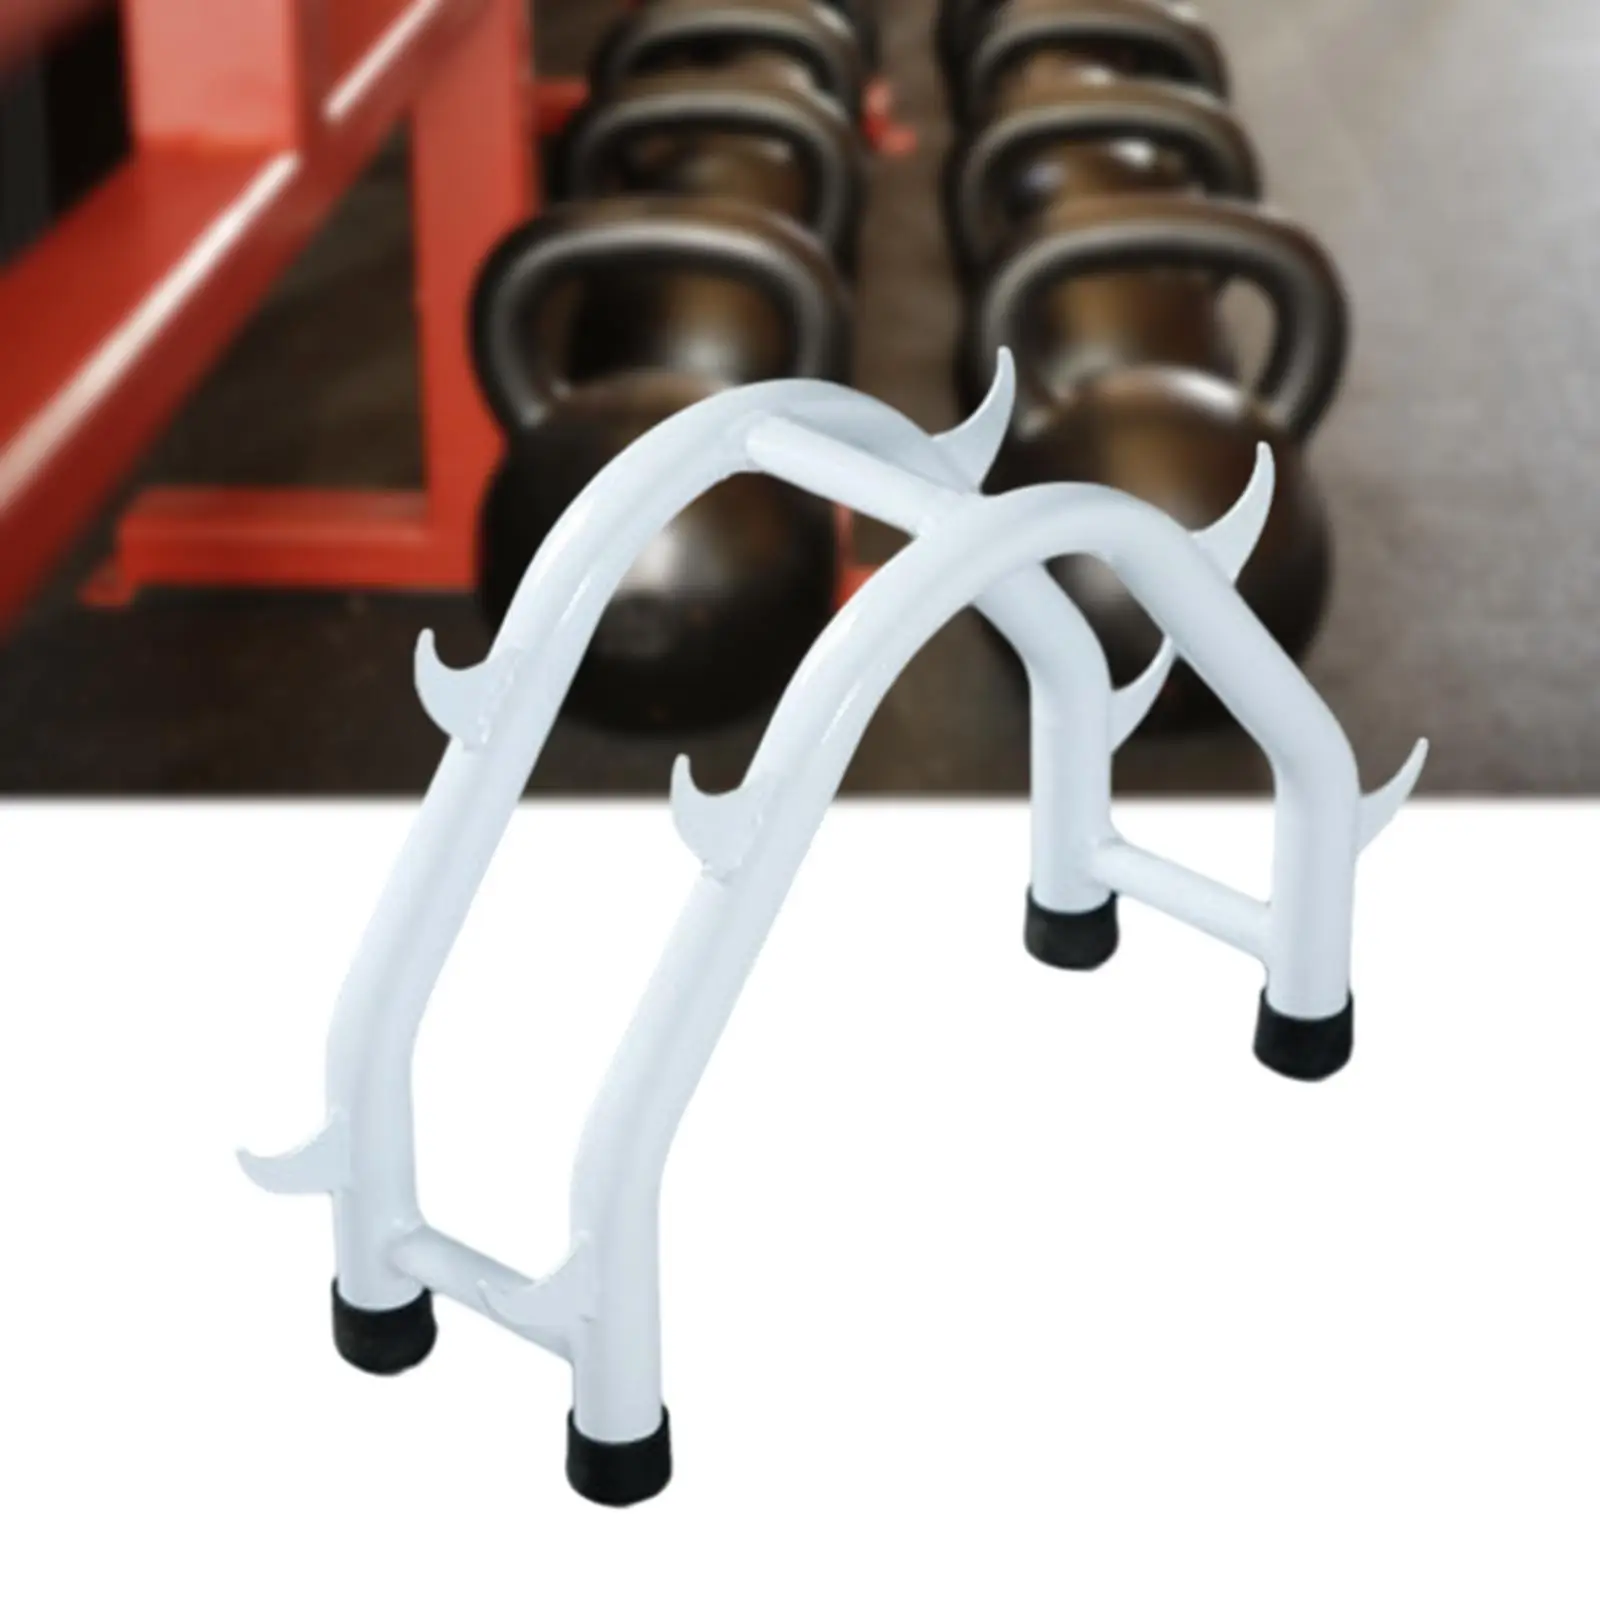 Dumbbell Rack Dumbbell Holder Weight Storage Organizer Dumbell Weight Racks for Strength Training Workout Household Gym Exercise